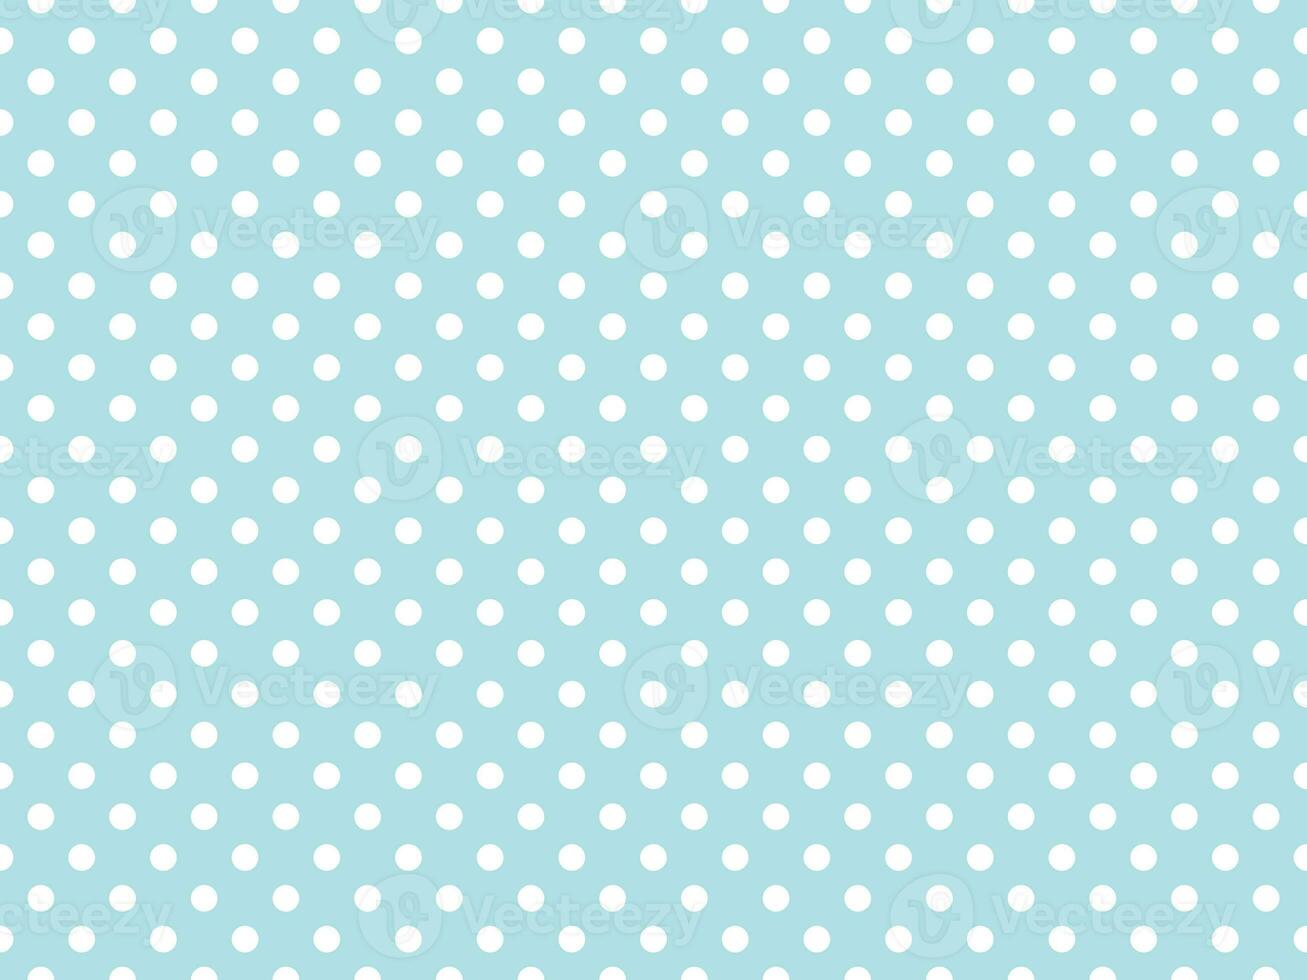 bianca polka puntini al di sopra di polvere blu sfondo foto